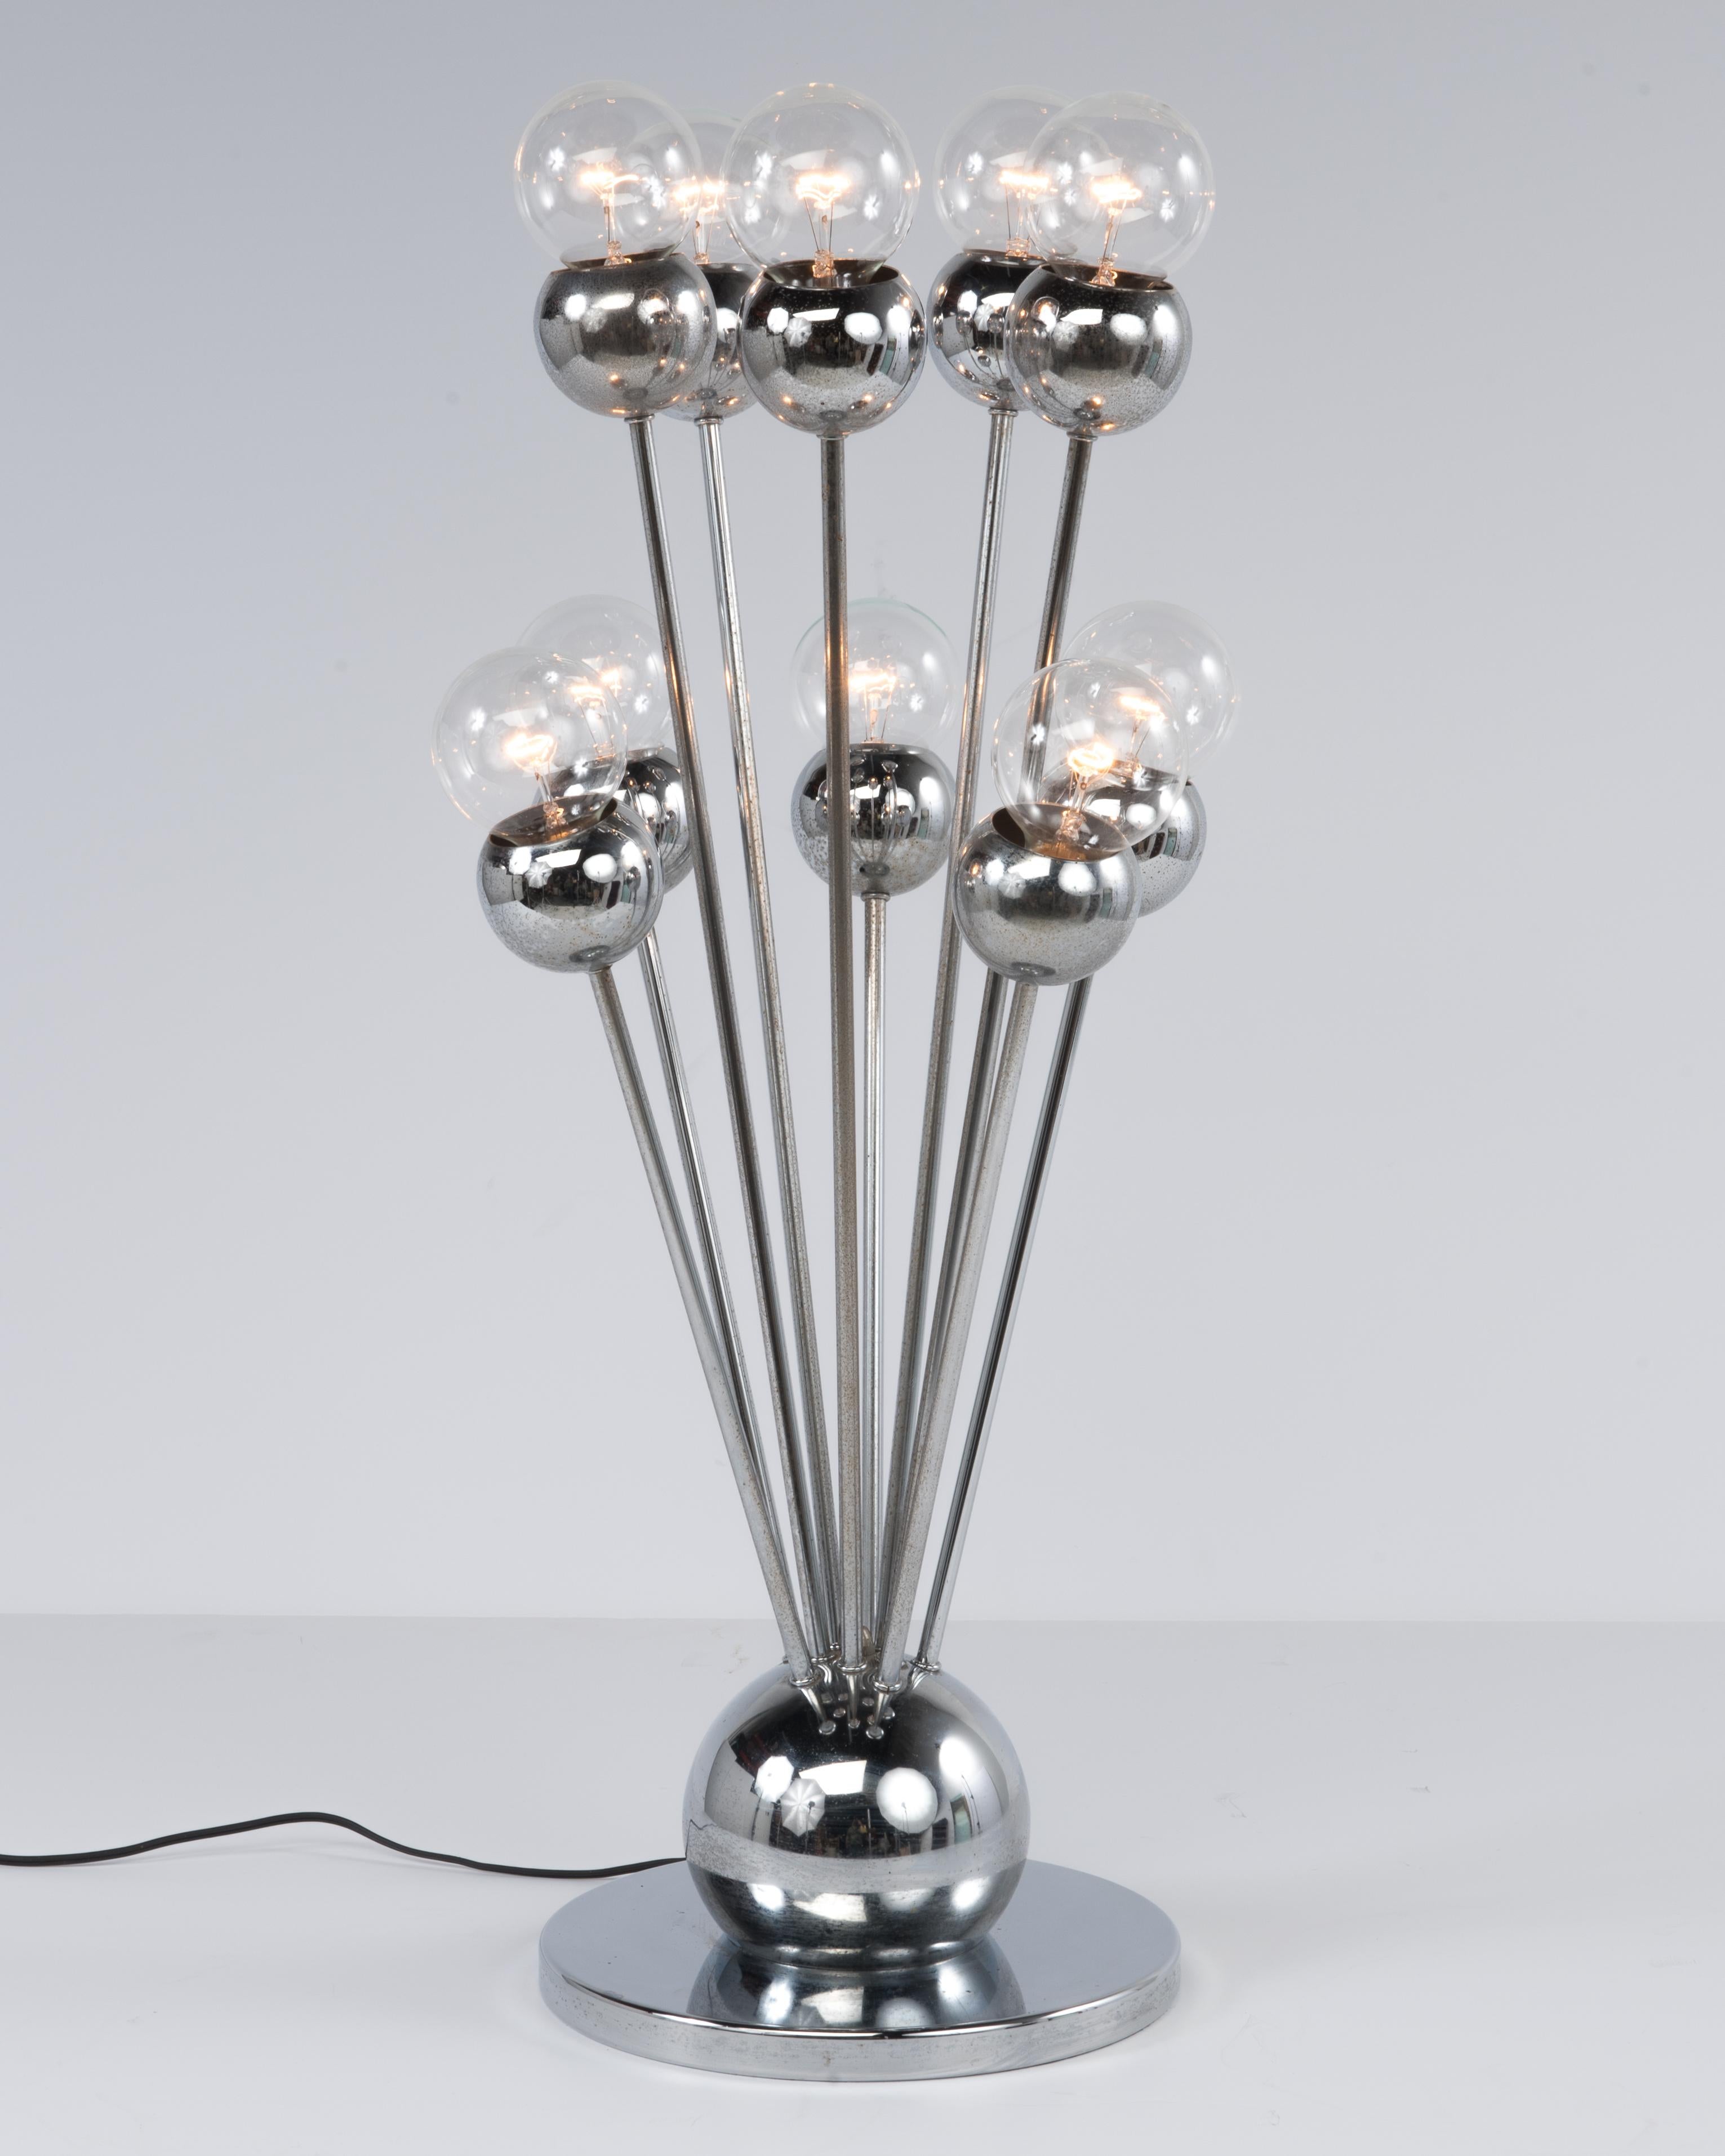 Italian Torino Italy Lamp Chrome Eyeball Table Lamp Sputnik Midcentury Space Age